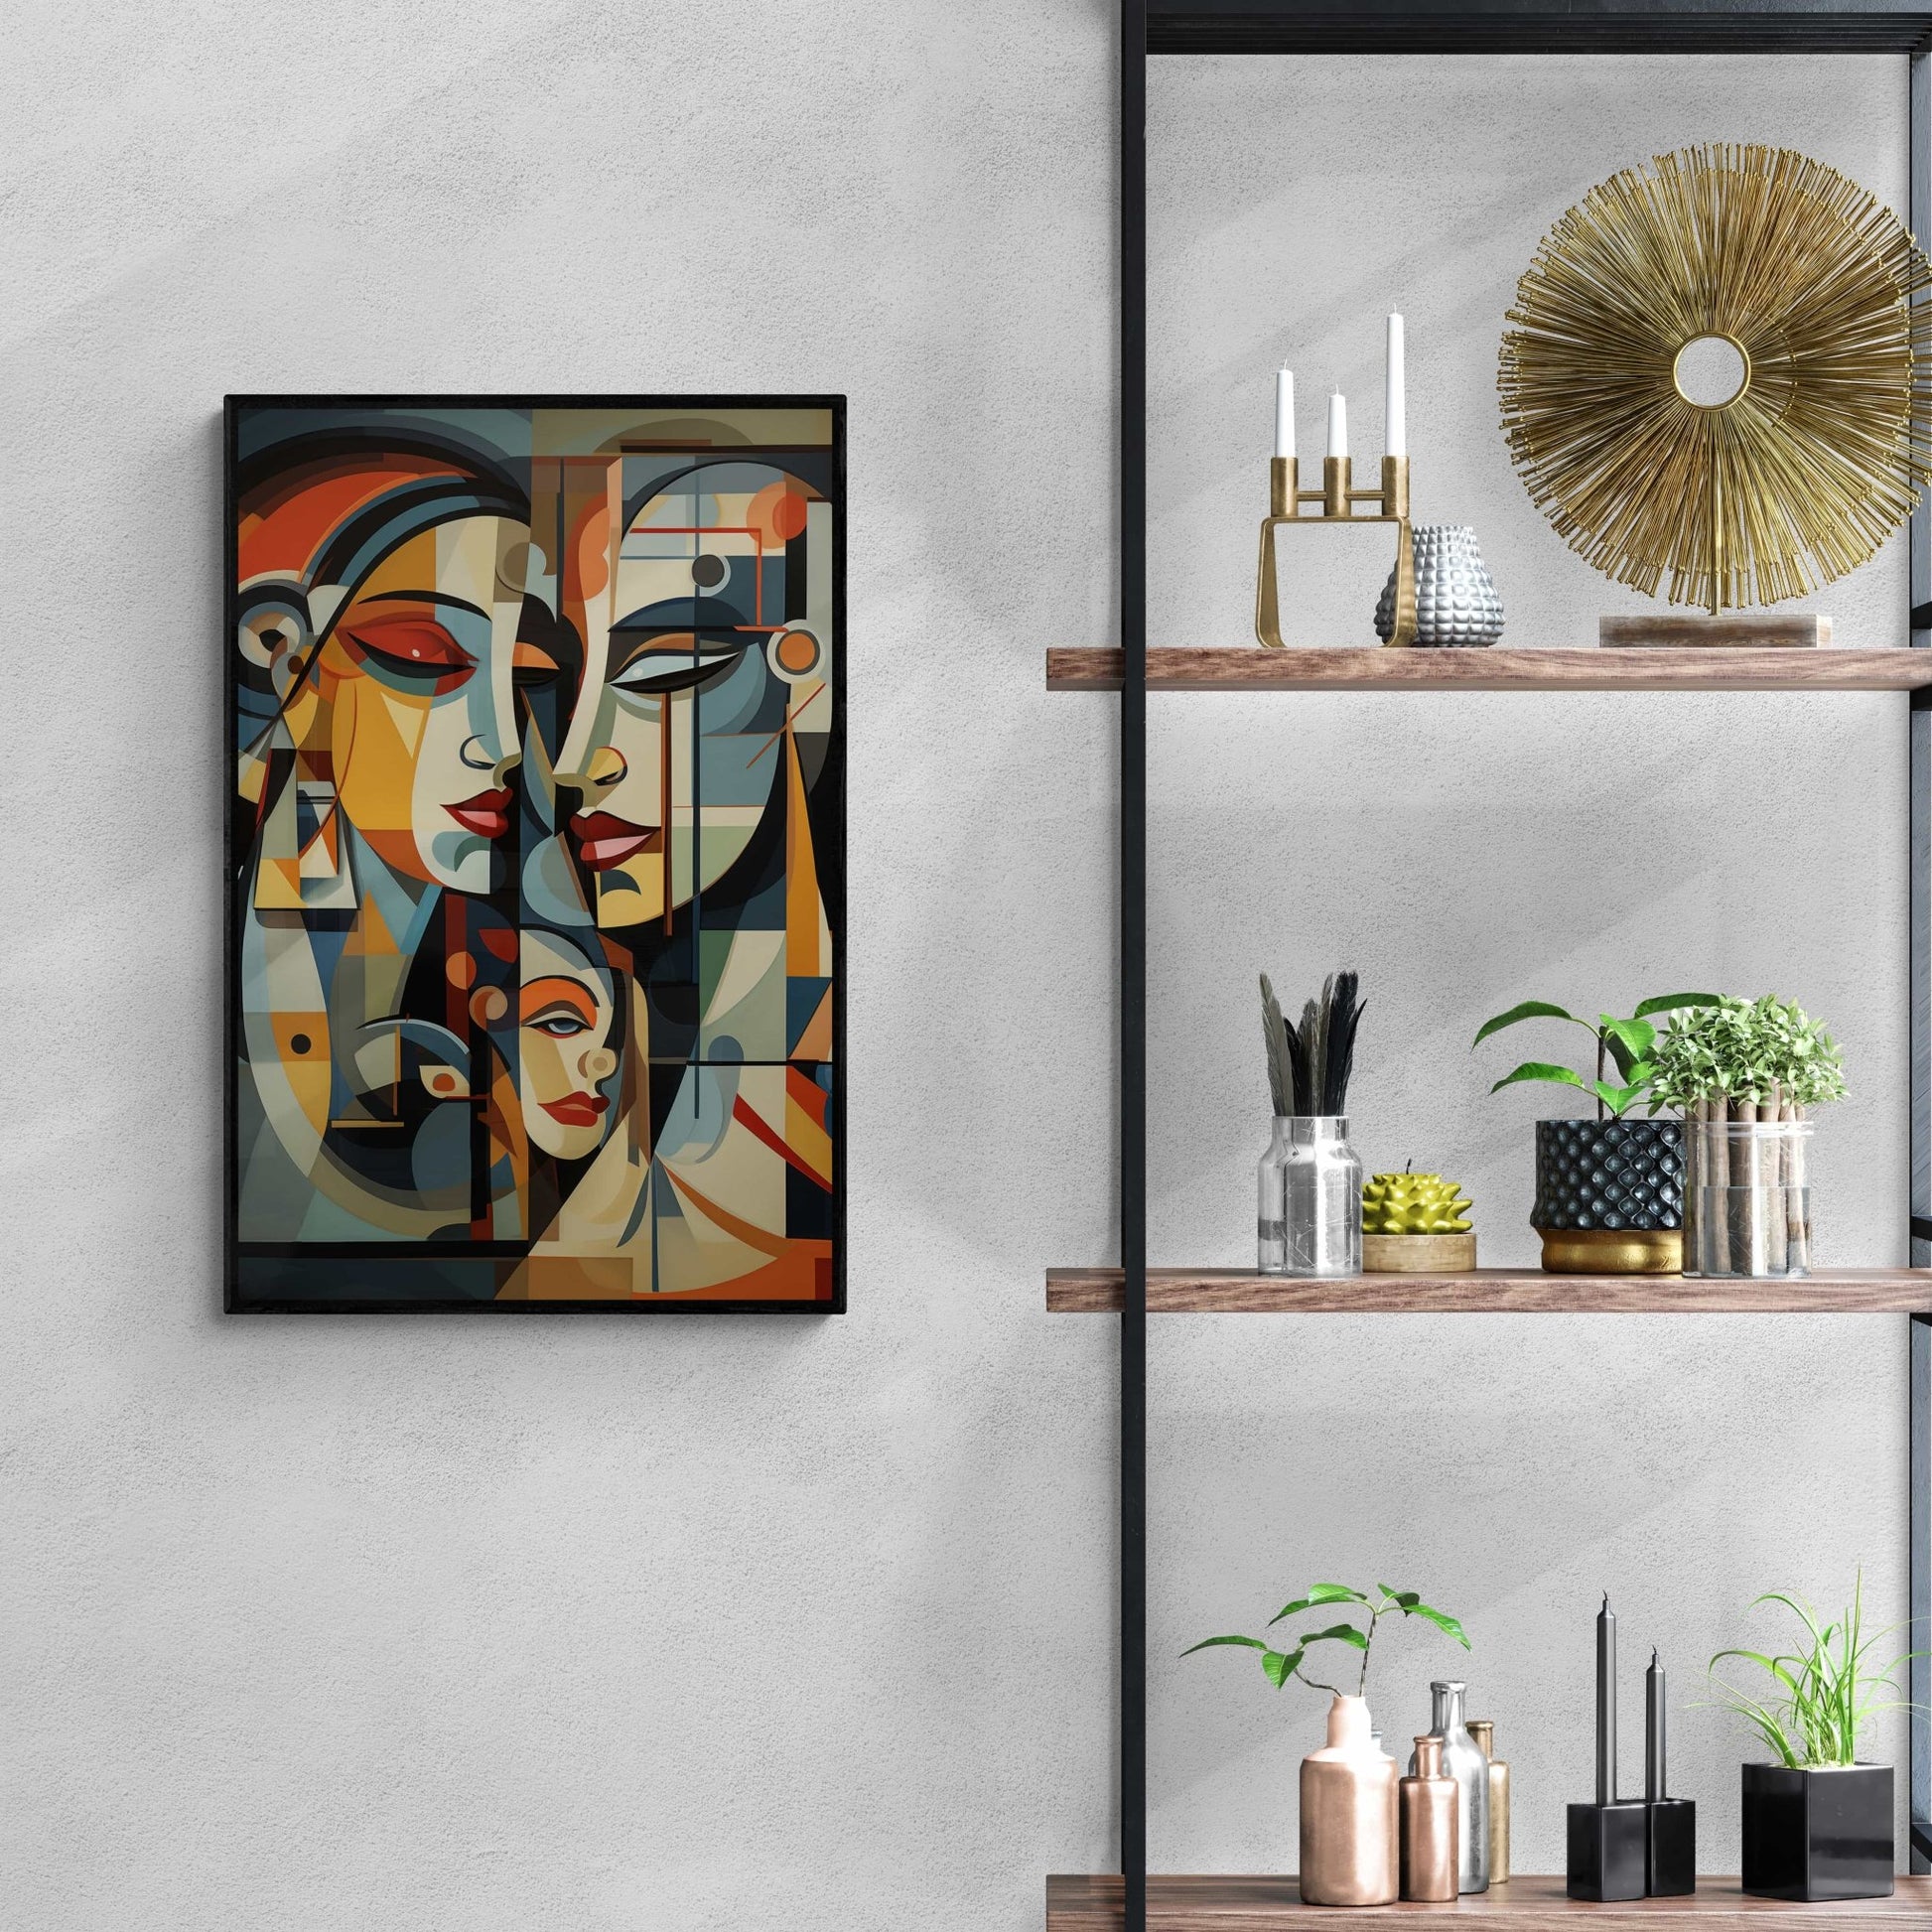 abstract-faces-canvas-art-modern-cubist-wall-decor